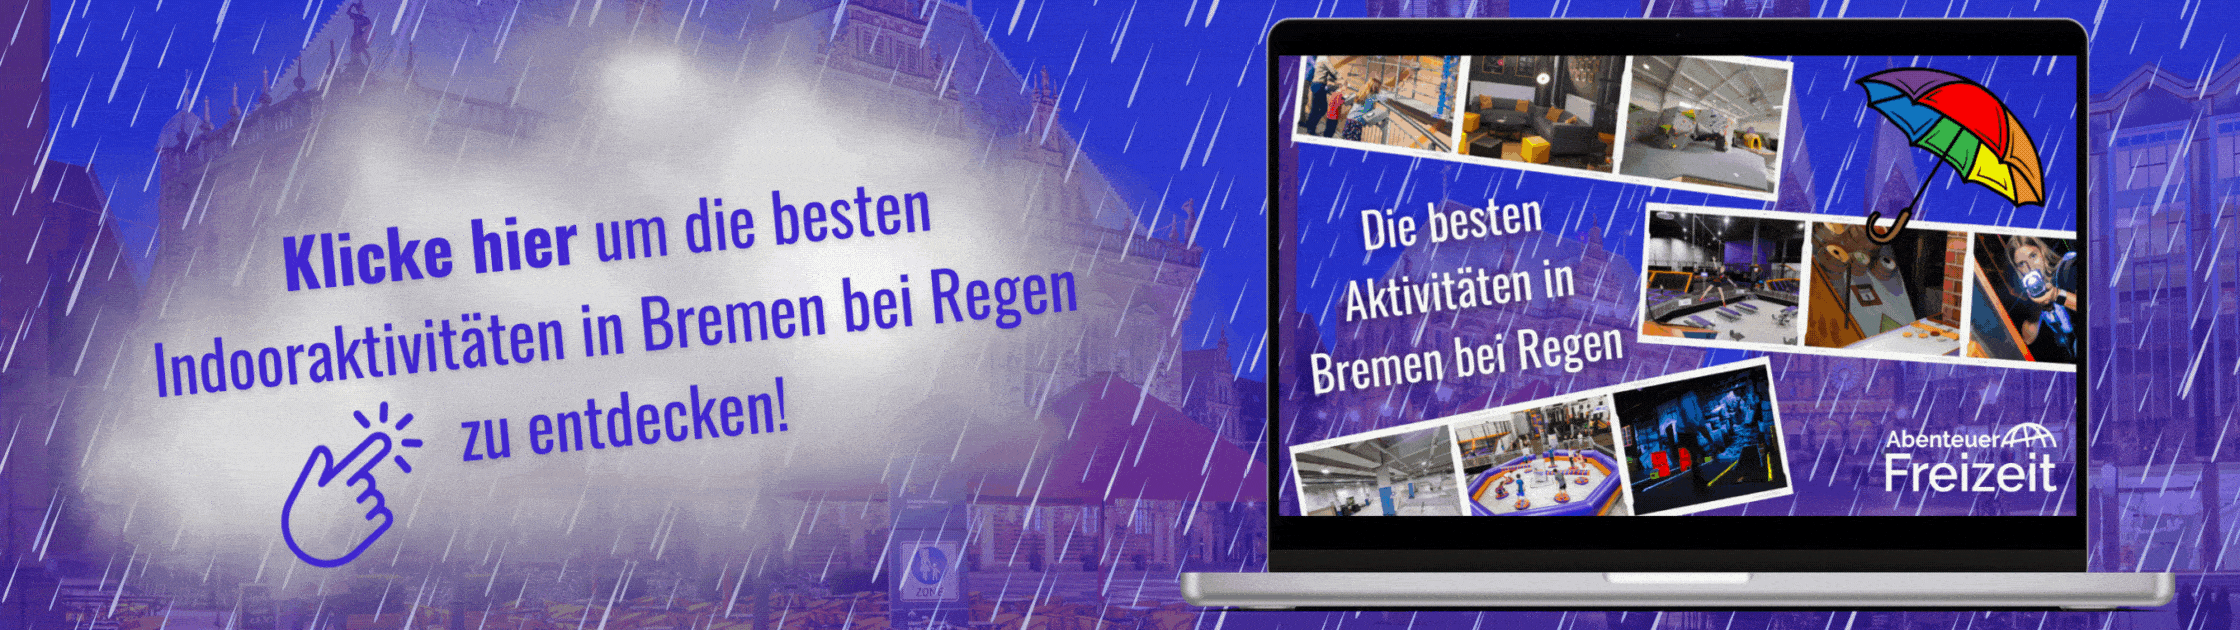 Indooraktivitäten in Bremen bei Regen